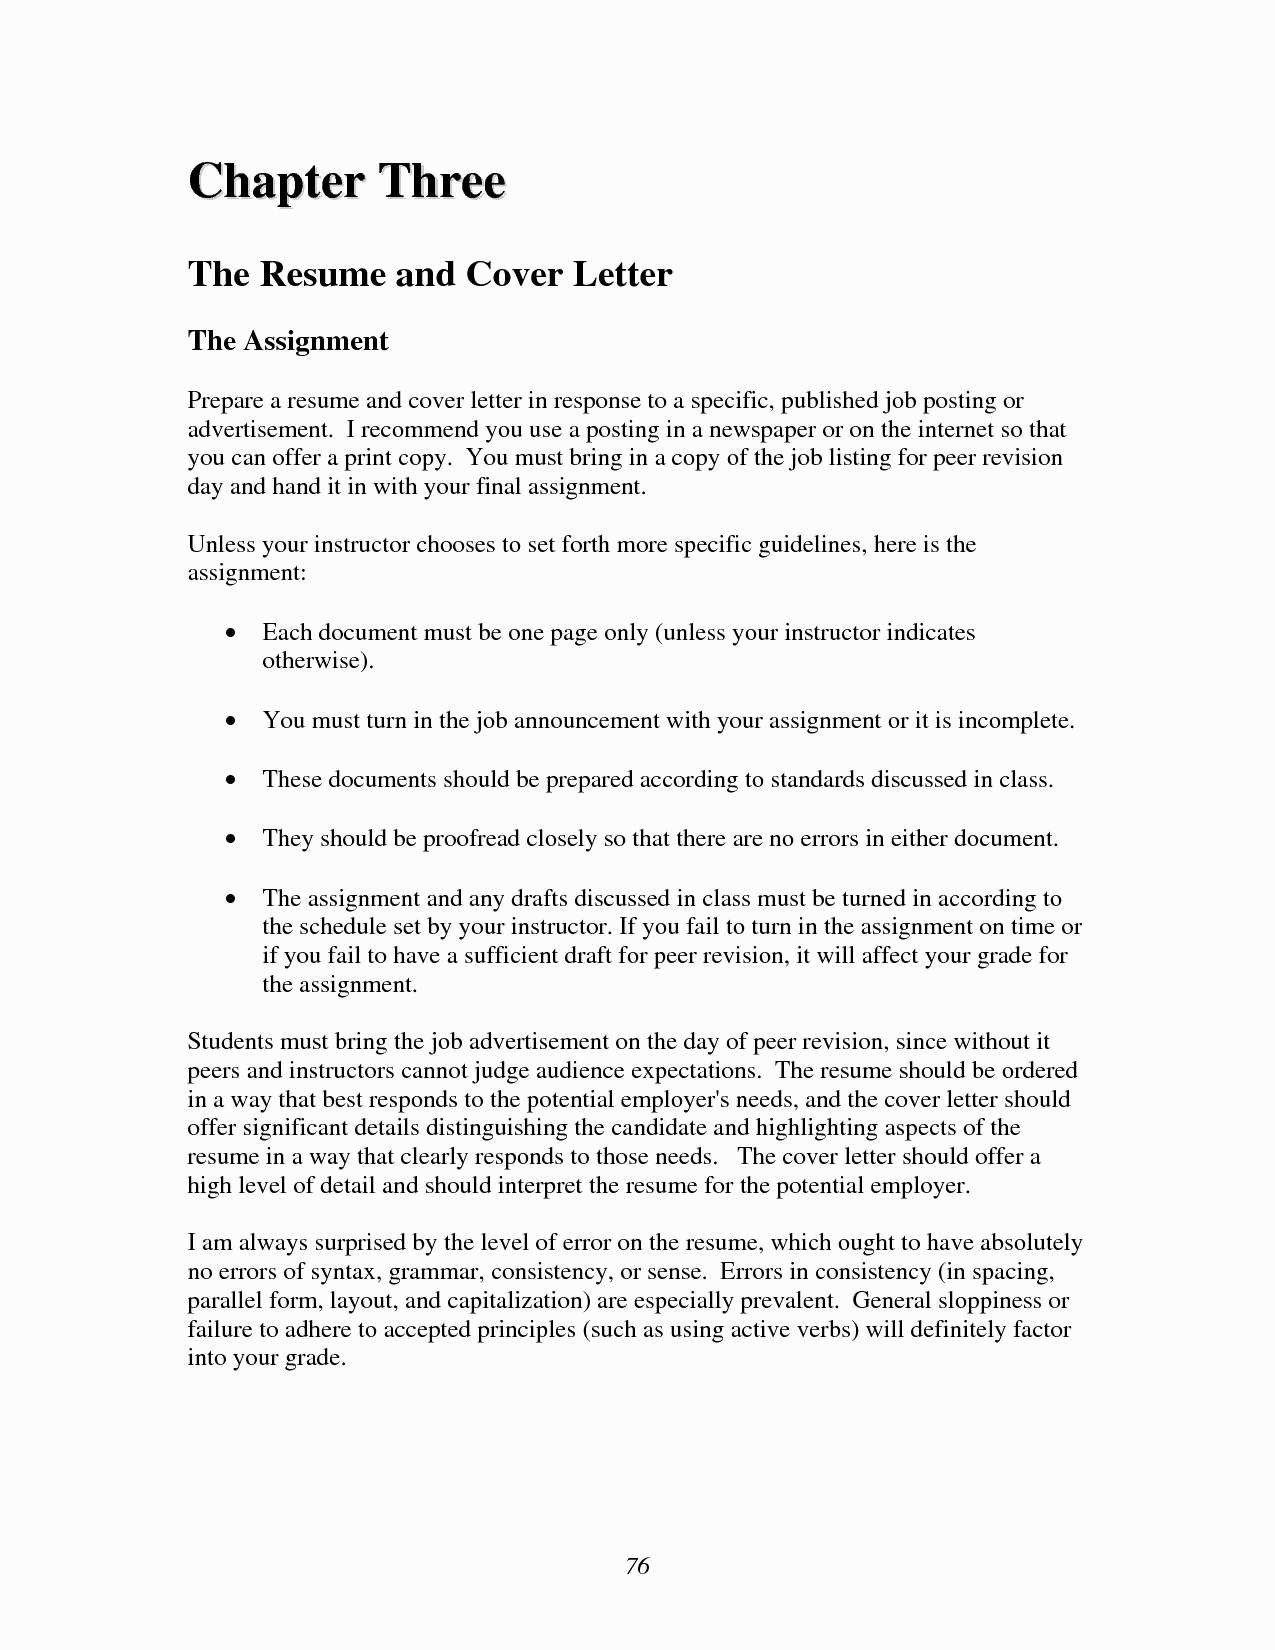 Cover Letter Sample for Job Application Template - Employment Letter Example Fresh Job Fer Letter Template Us Copy Od